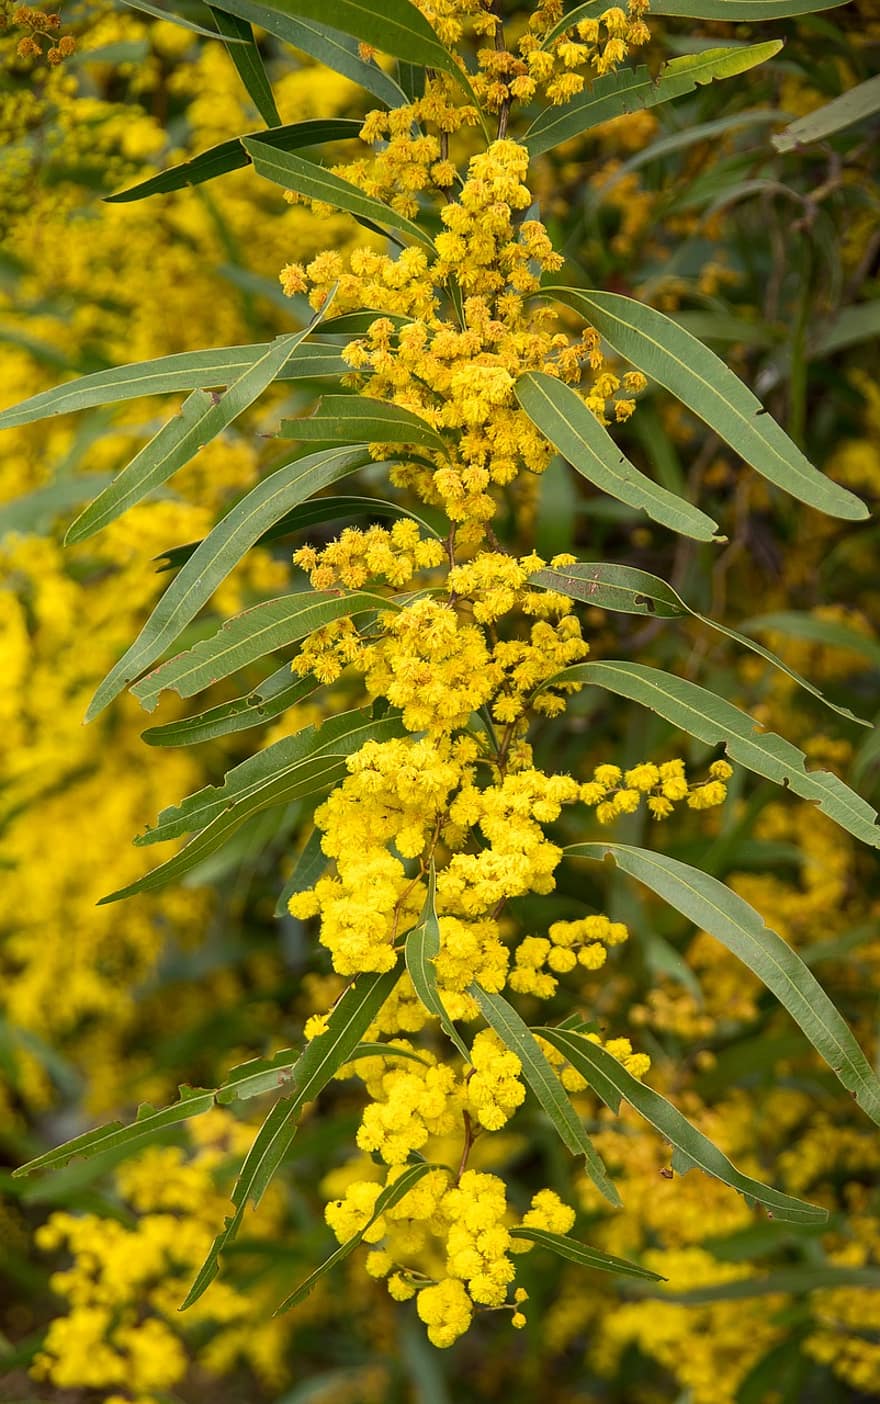 akasia, pial, bunga-bunga, serbuk sari, kuning, halus, asli Australia, pixabay